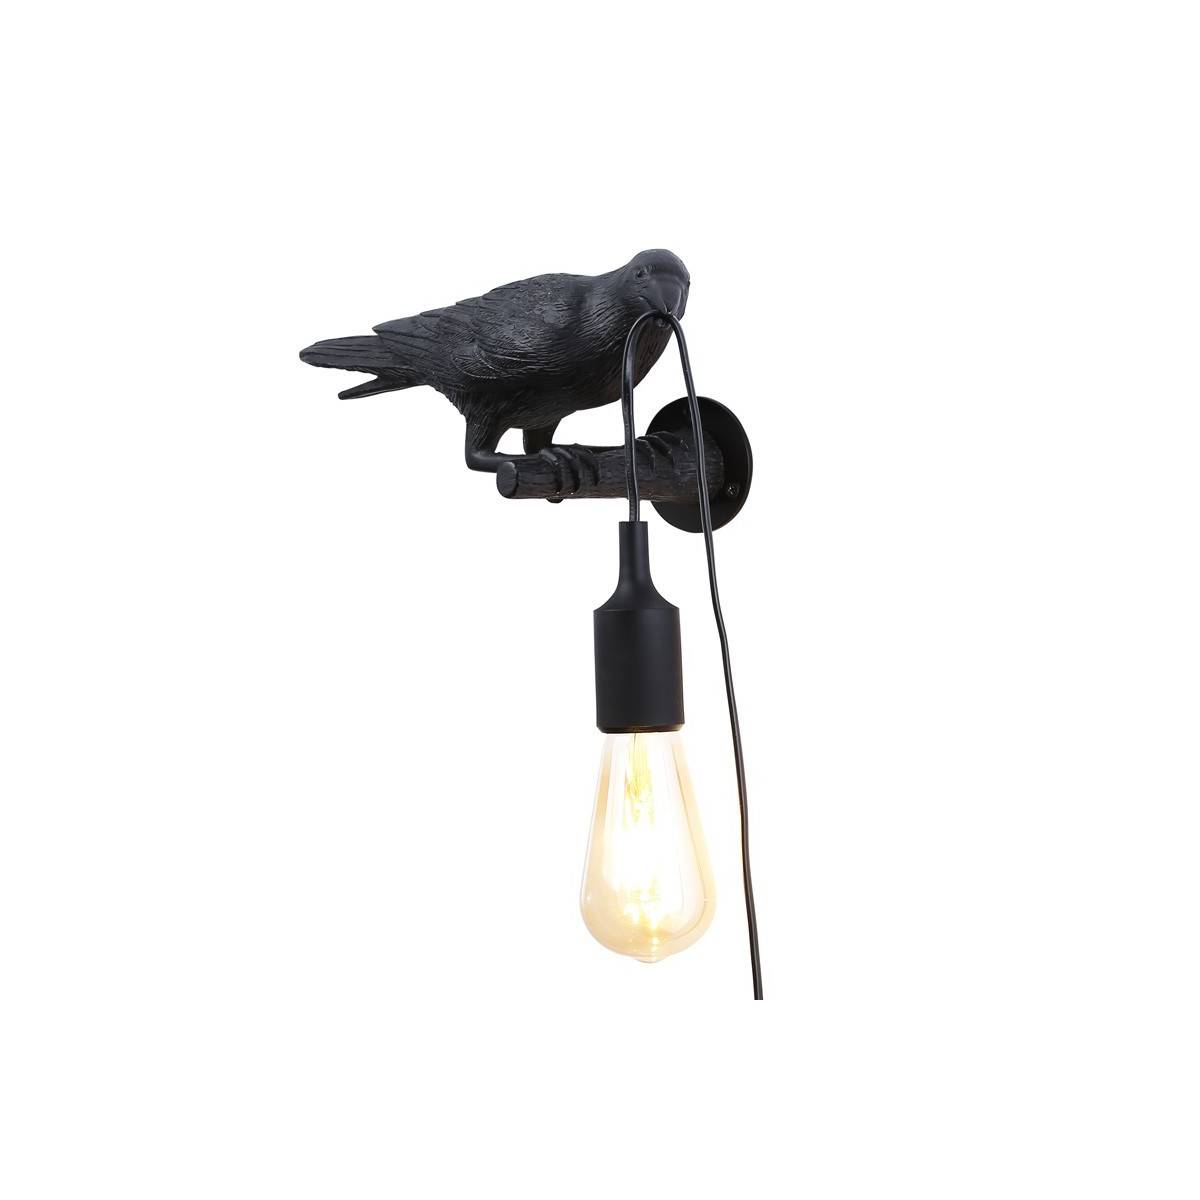 Raven resin wall sconce "Corb" | Bird series